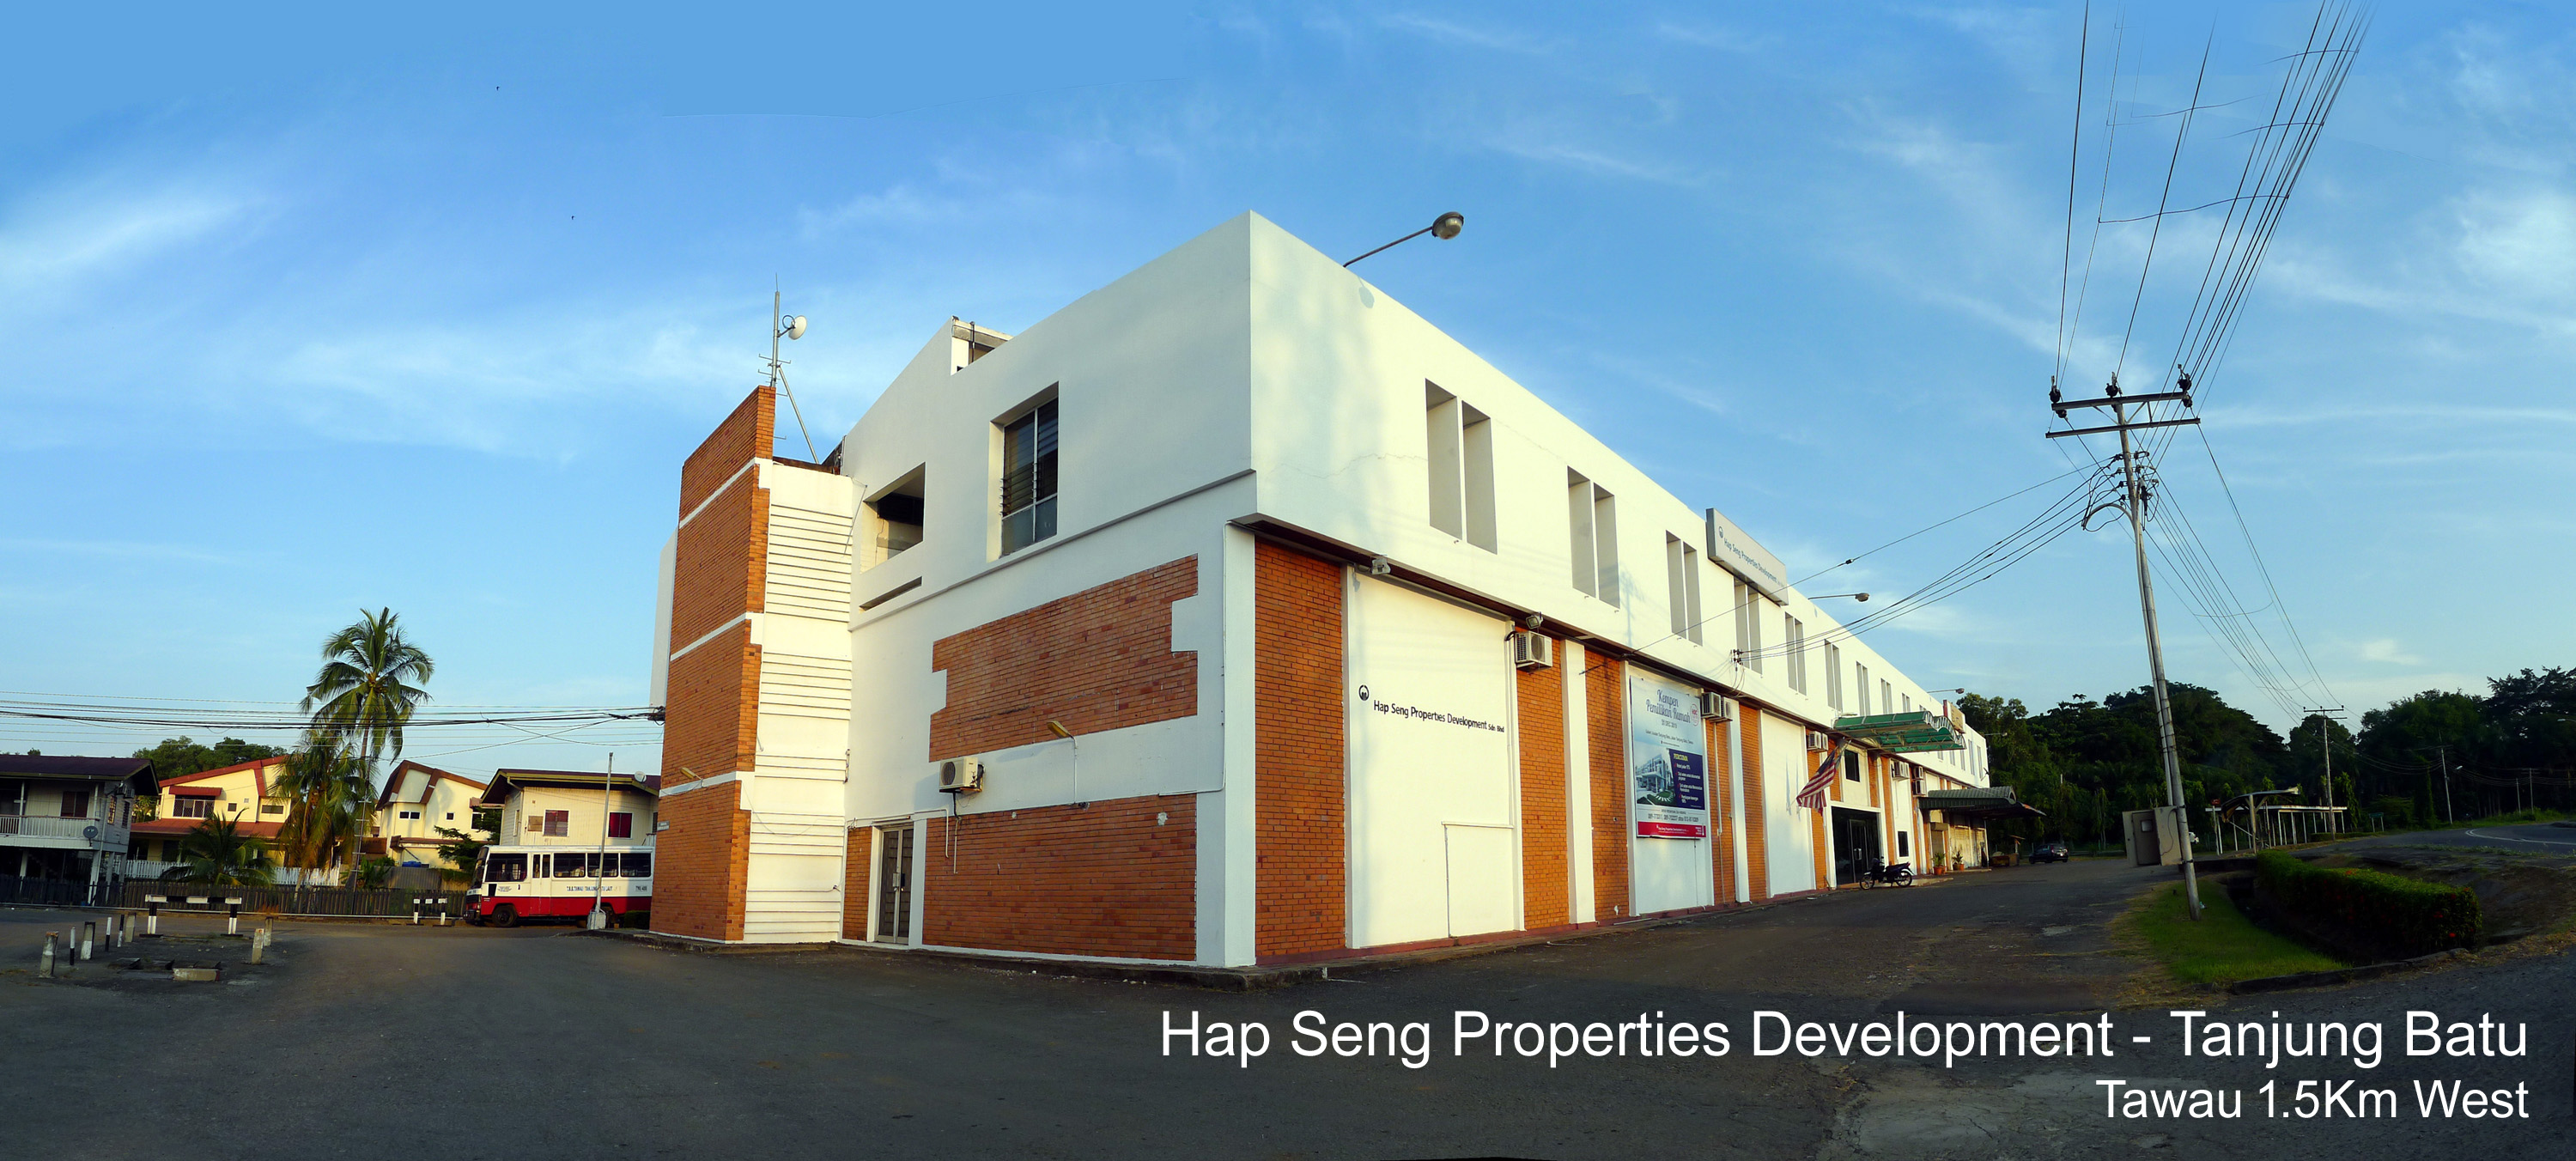 Hap Seng Properties Development - Tanjung Batu